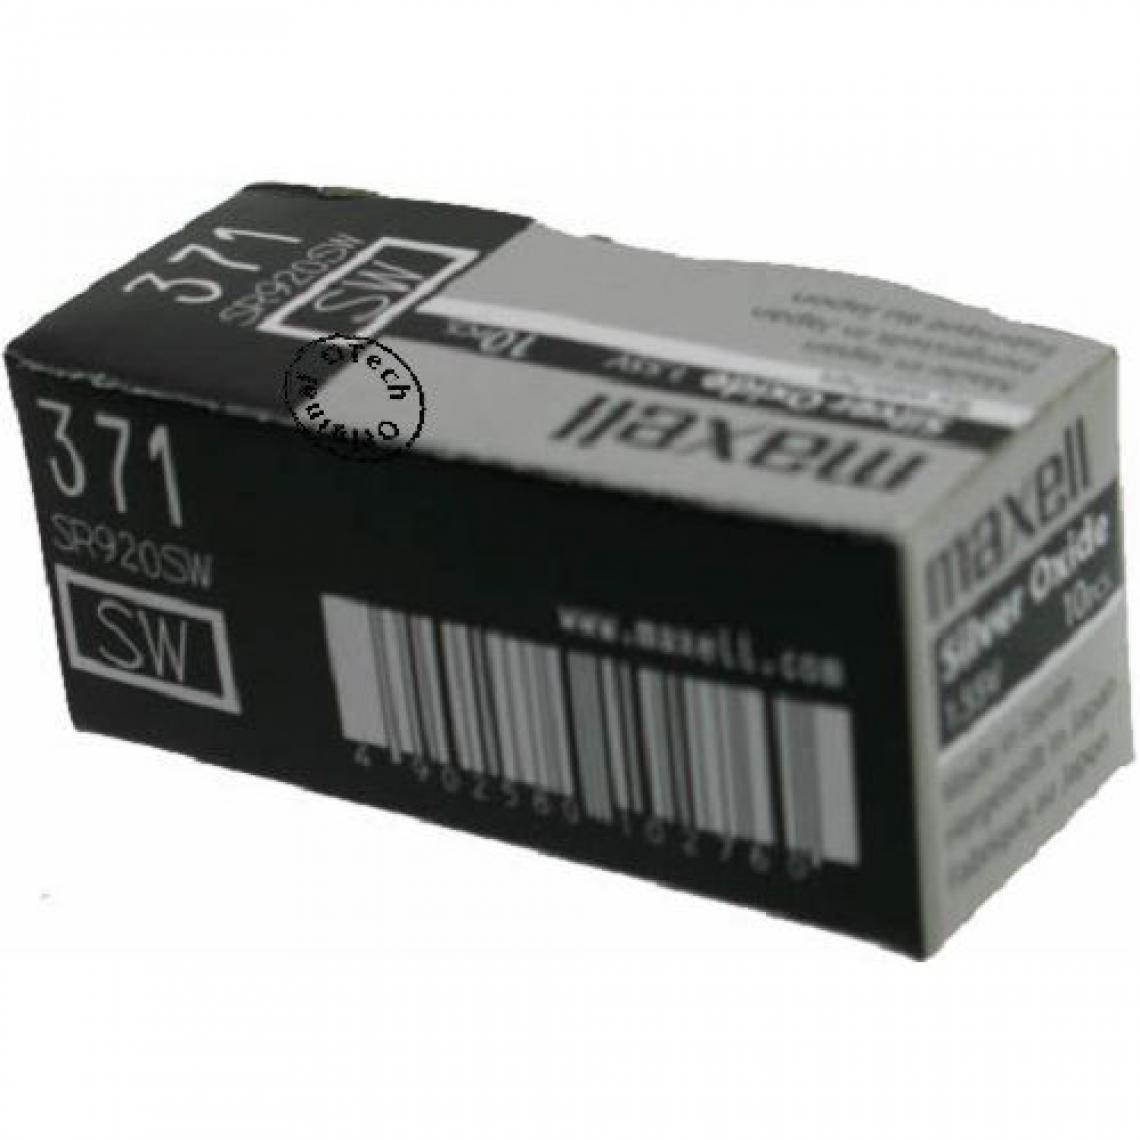 Otech - Pack de 10 piles maxell pour MAXELL SR920 - Piles rechargeables